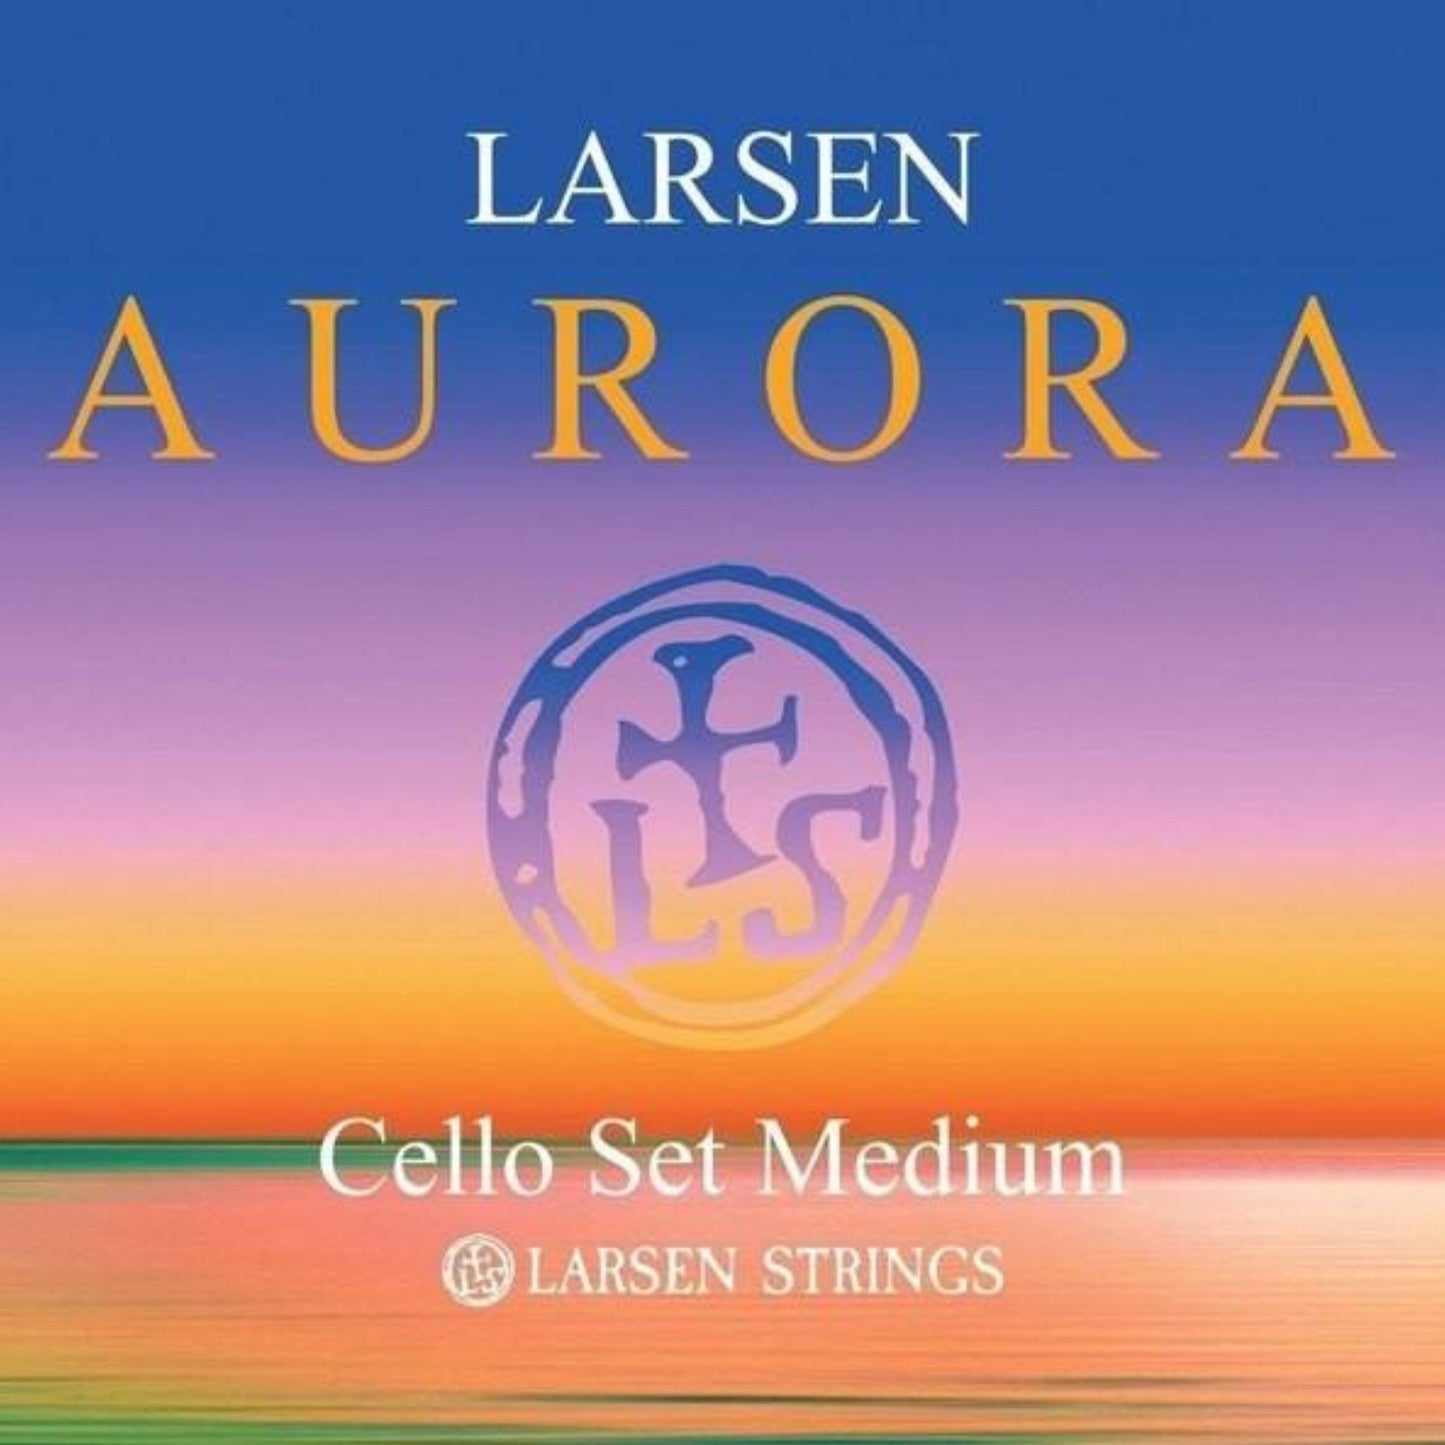 Set of LARSEN Aurora cello strings 4/4